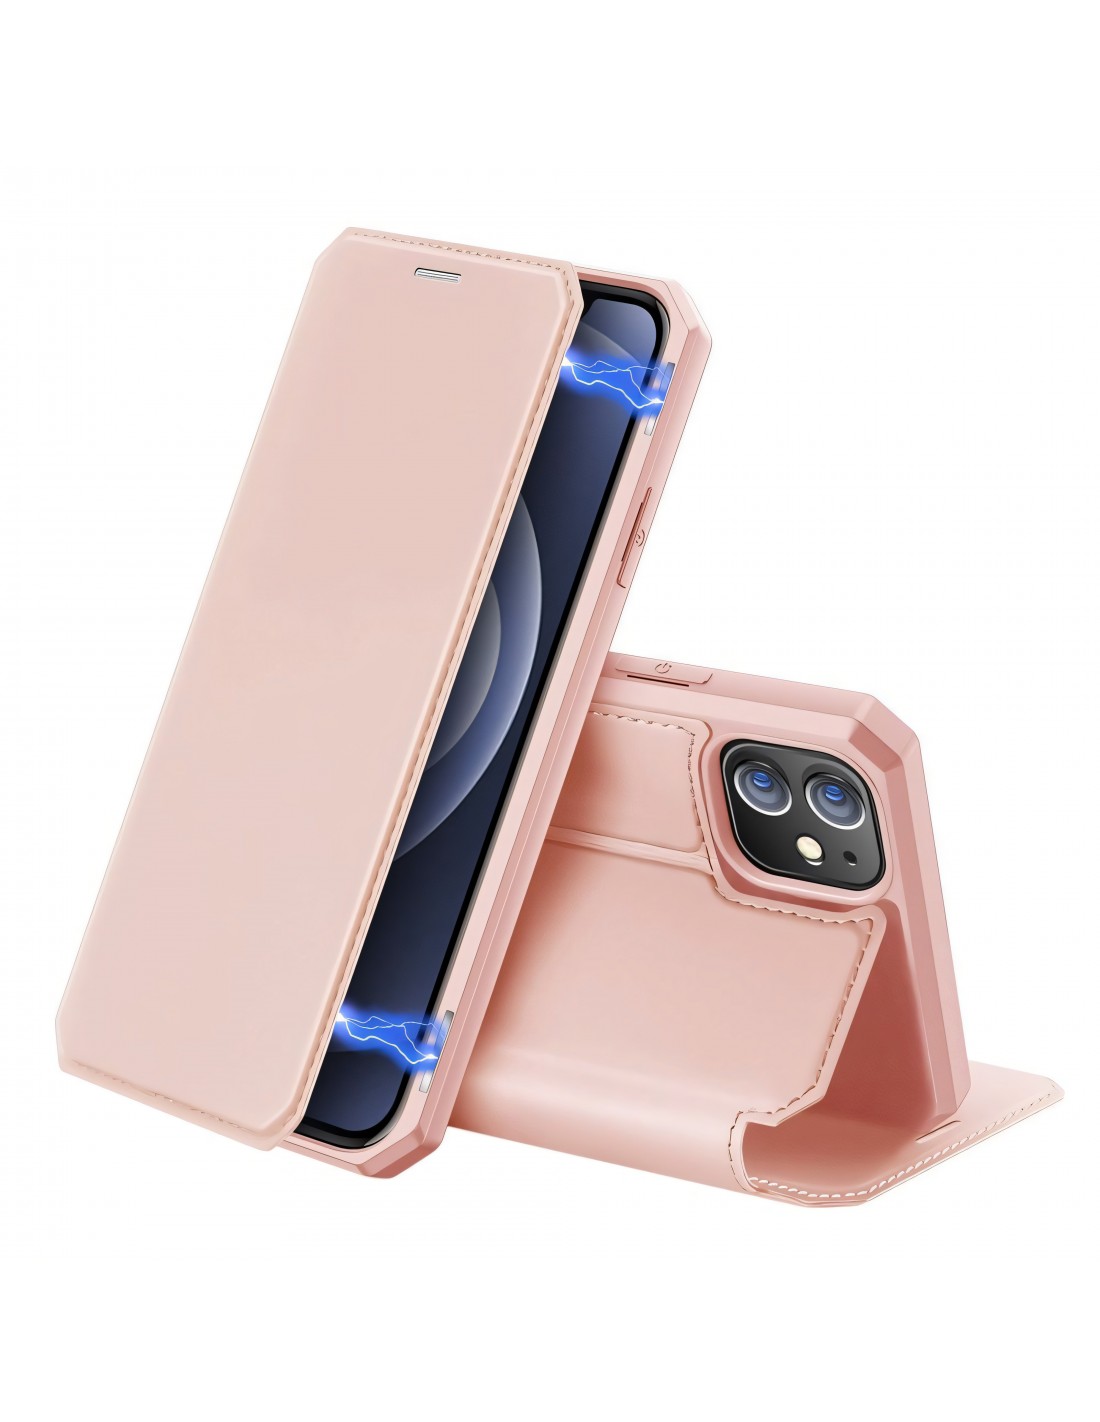 Etui de protection iPhone 12 Mini coque silicone intégrée - Rose